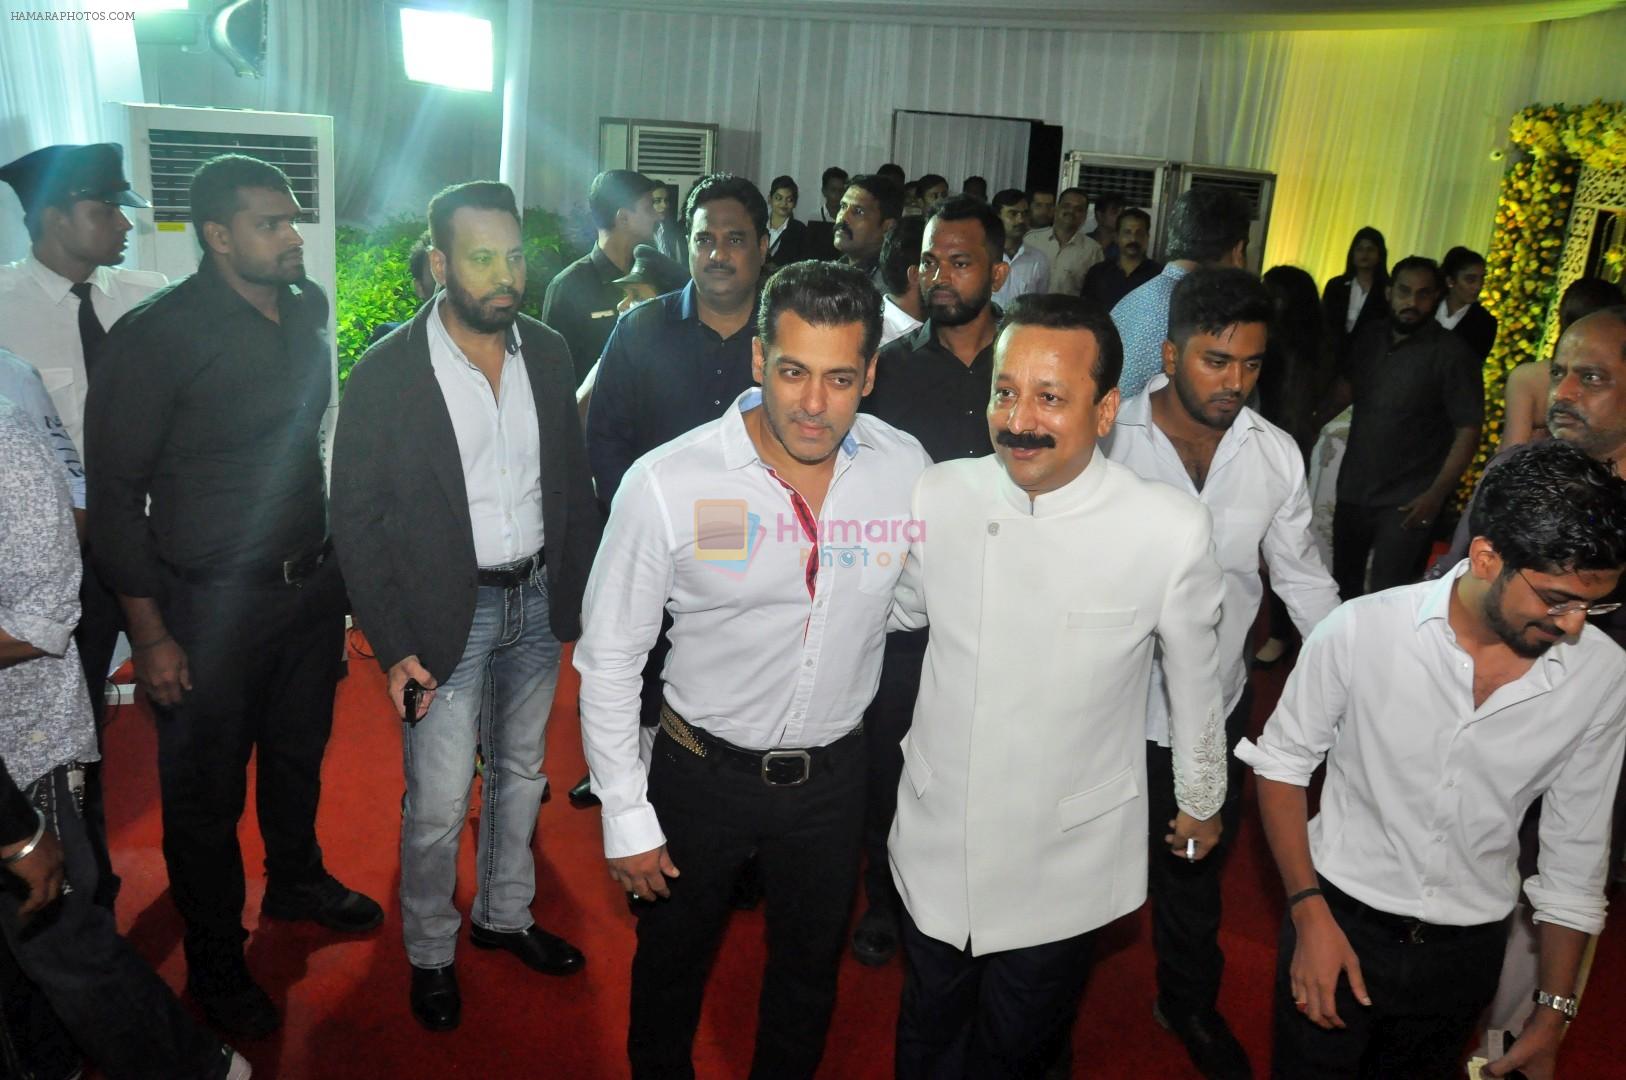 Salman Khan at Baba Siddique Iftar Party in Mumbai on 24th June 2017